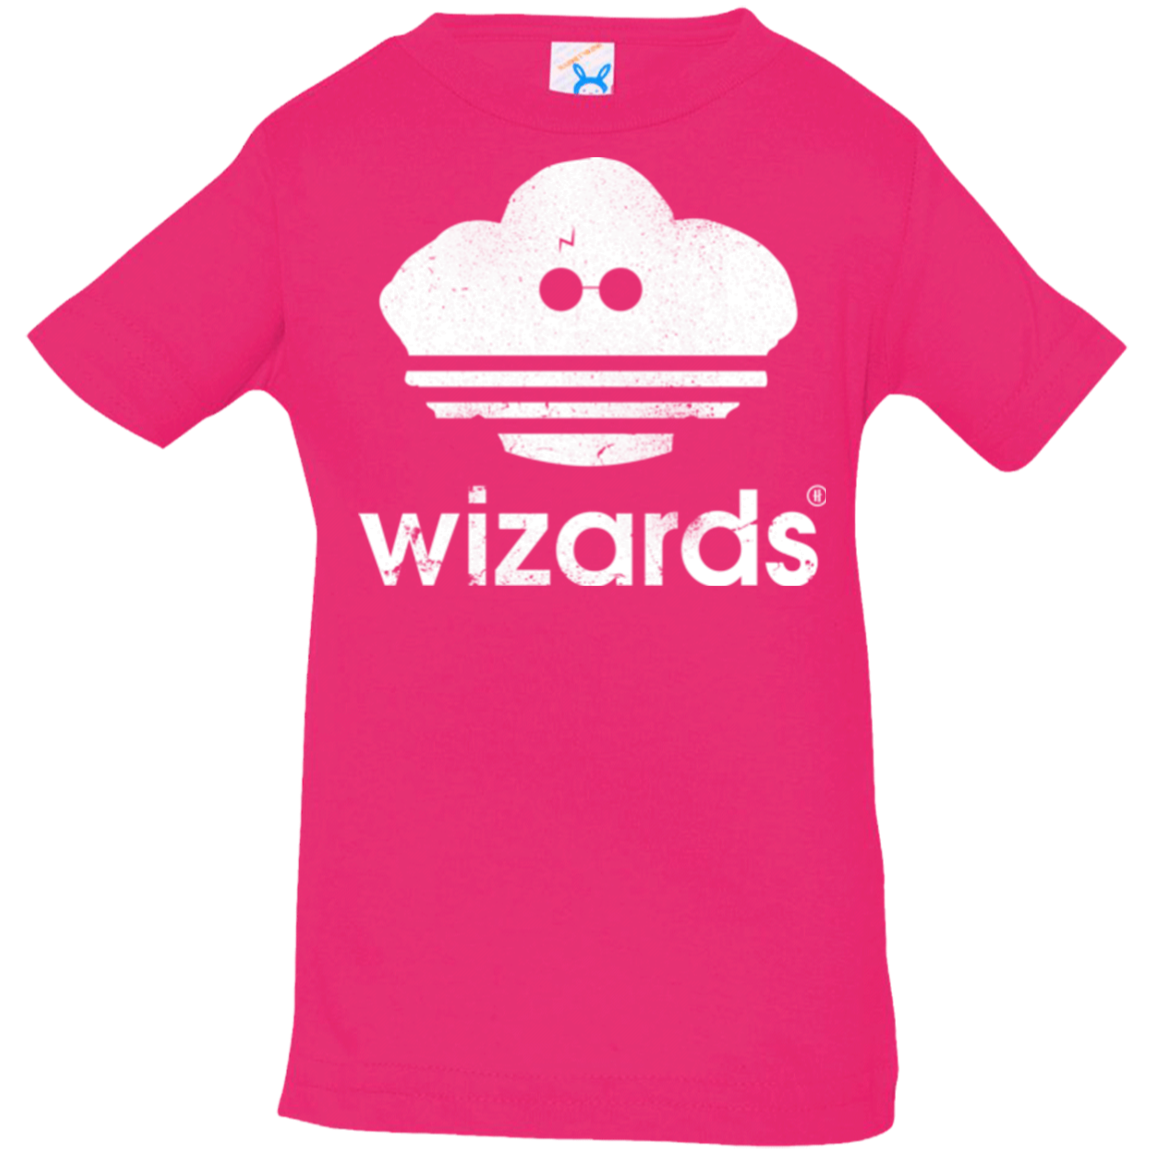 Wizards Infant Premium T-Shirt